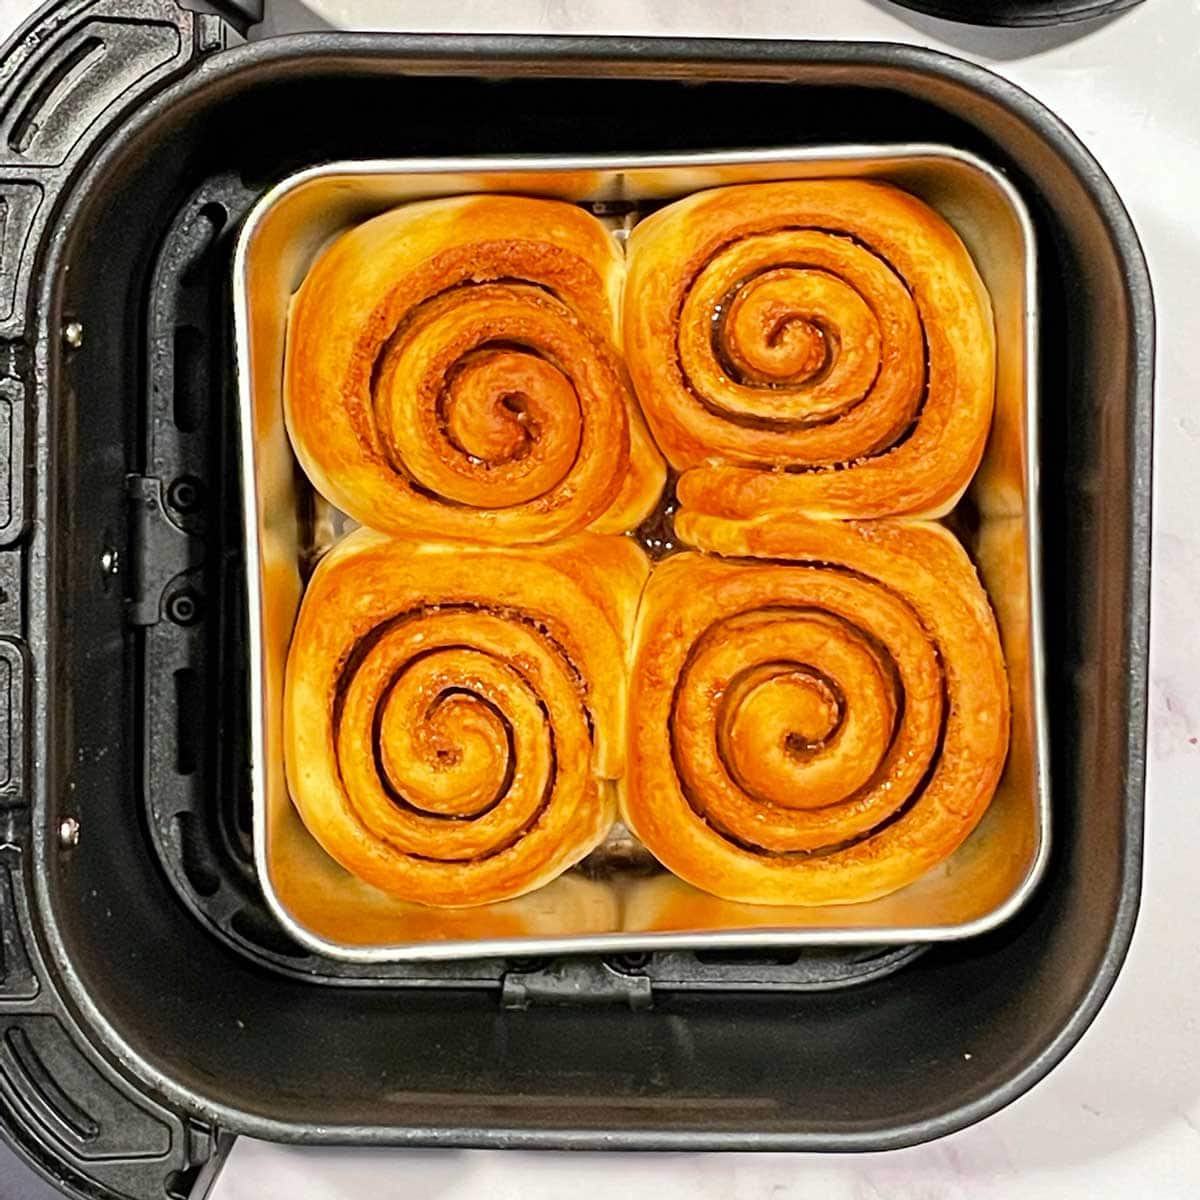 Cinnamon rolls baked.